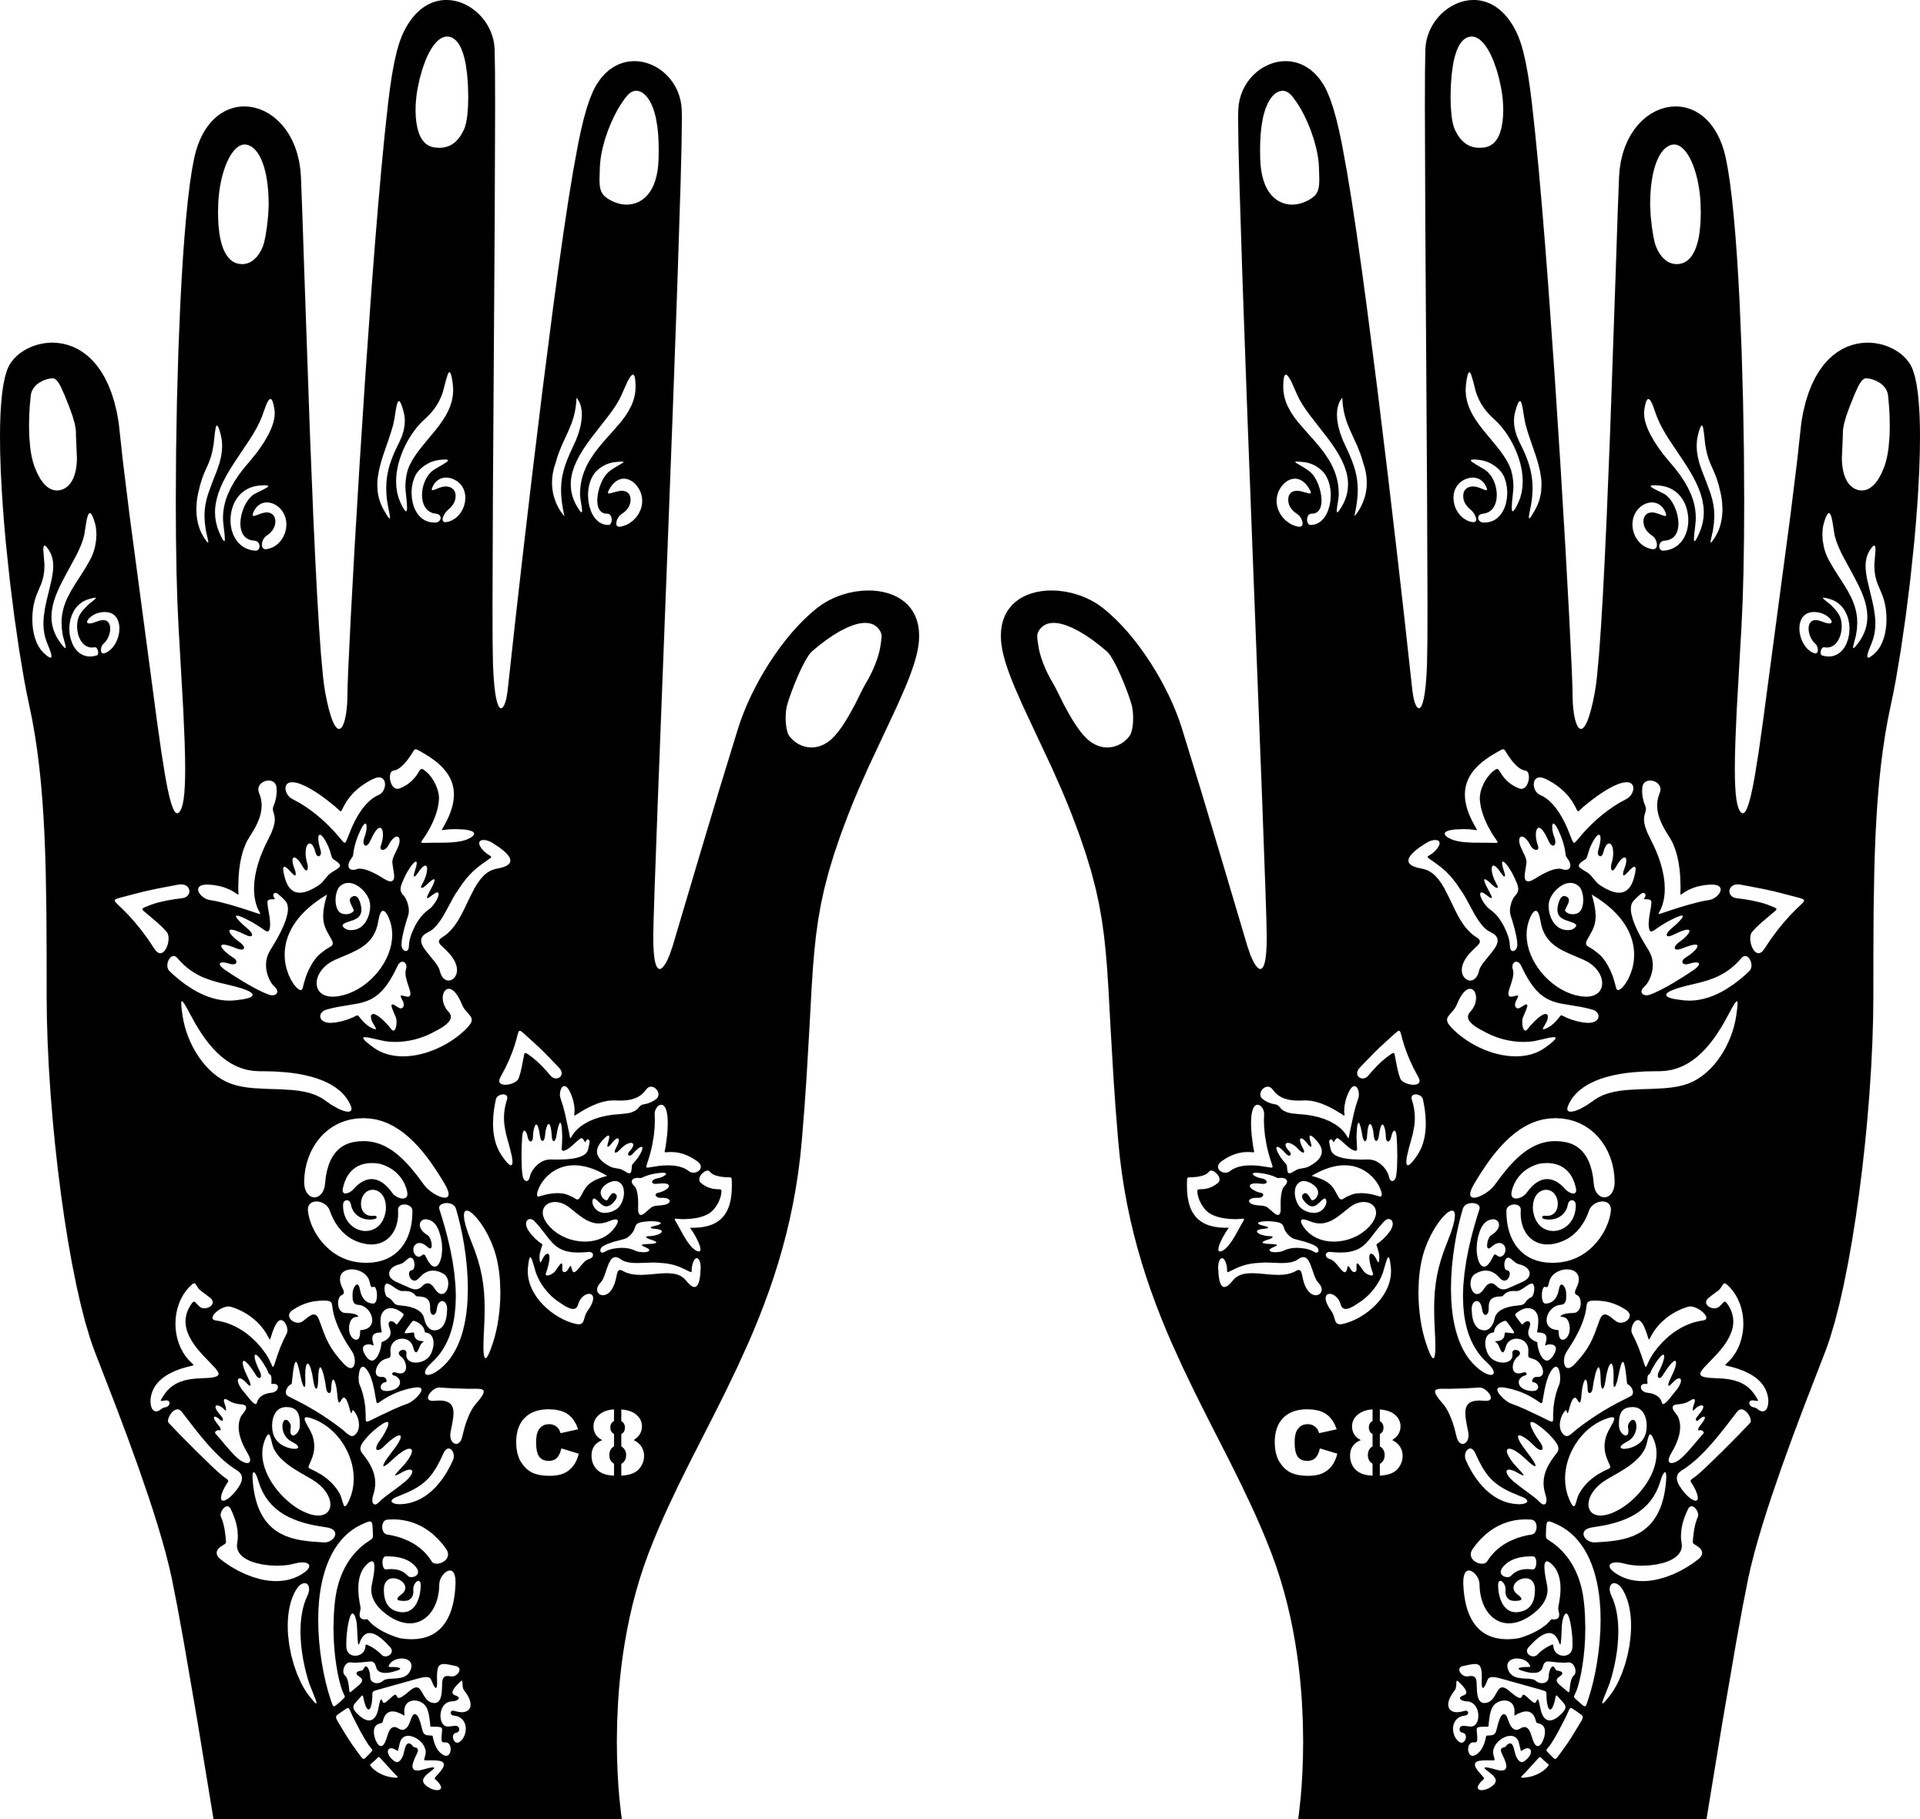 Dark Style Hand Tattoo Sticker Palm Tattoo Template Hand Simulation Temporary Sticker Beautiful Original Hand Tattoo